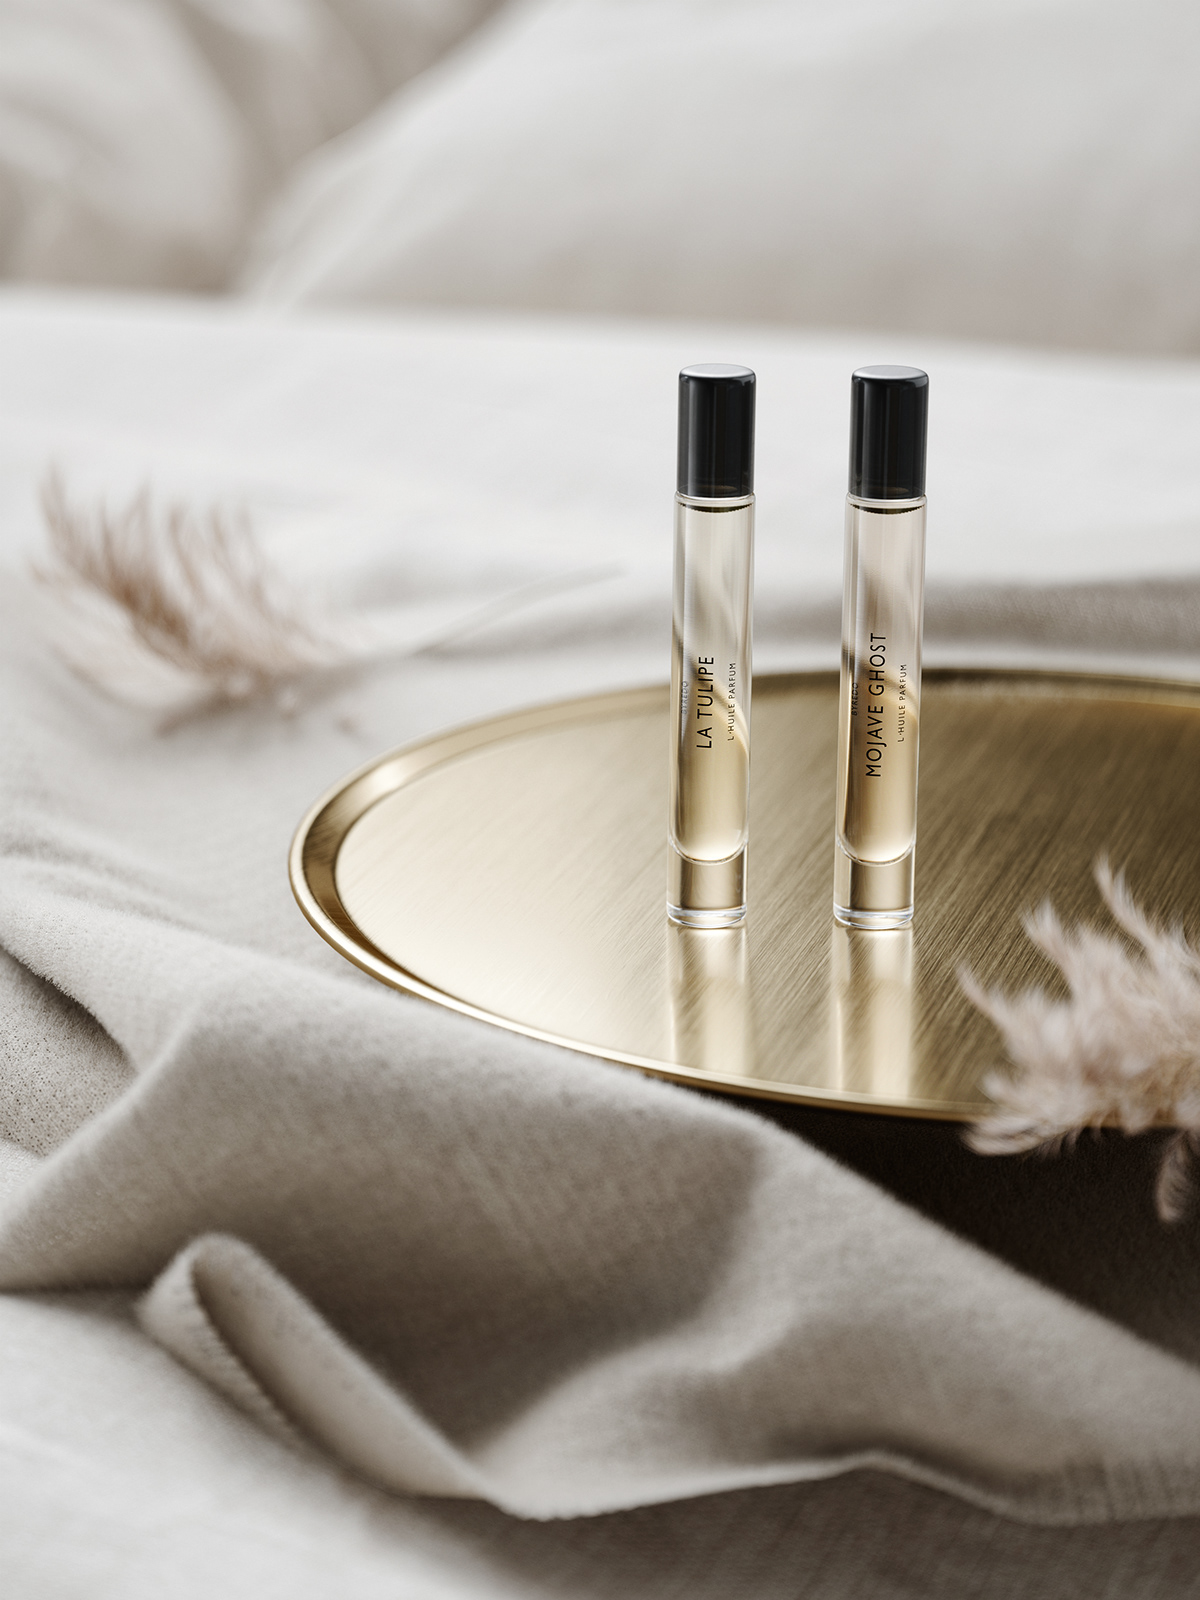 andriychuk Byredo cosmetics fabric FStorm nazar perfume product soap